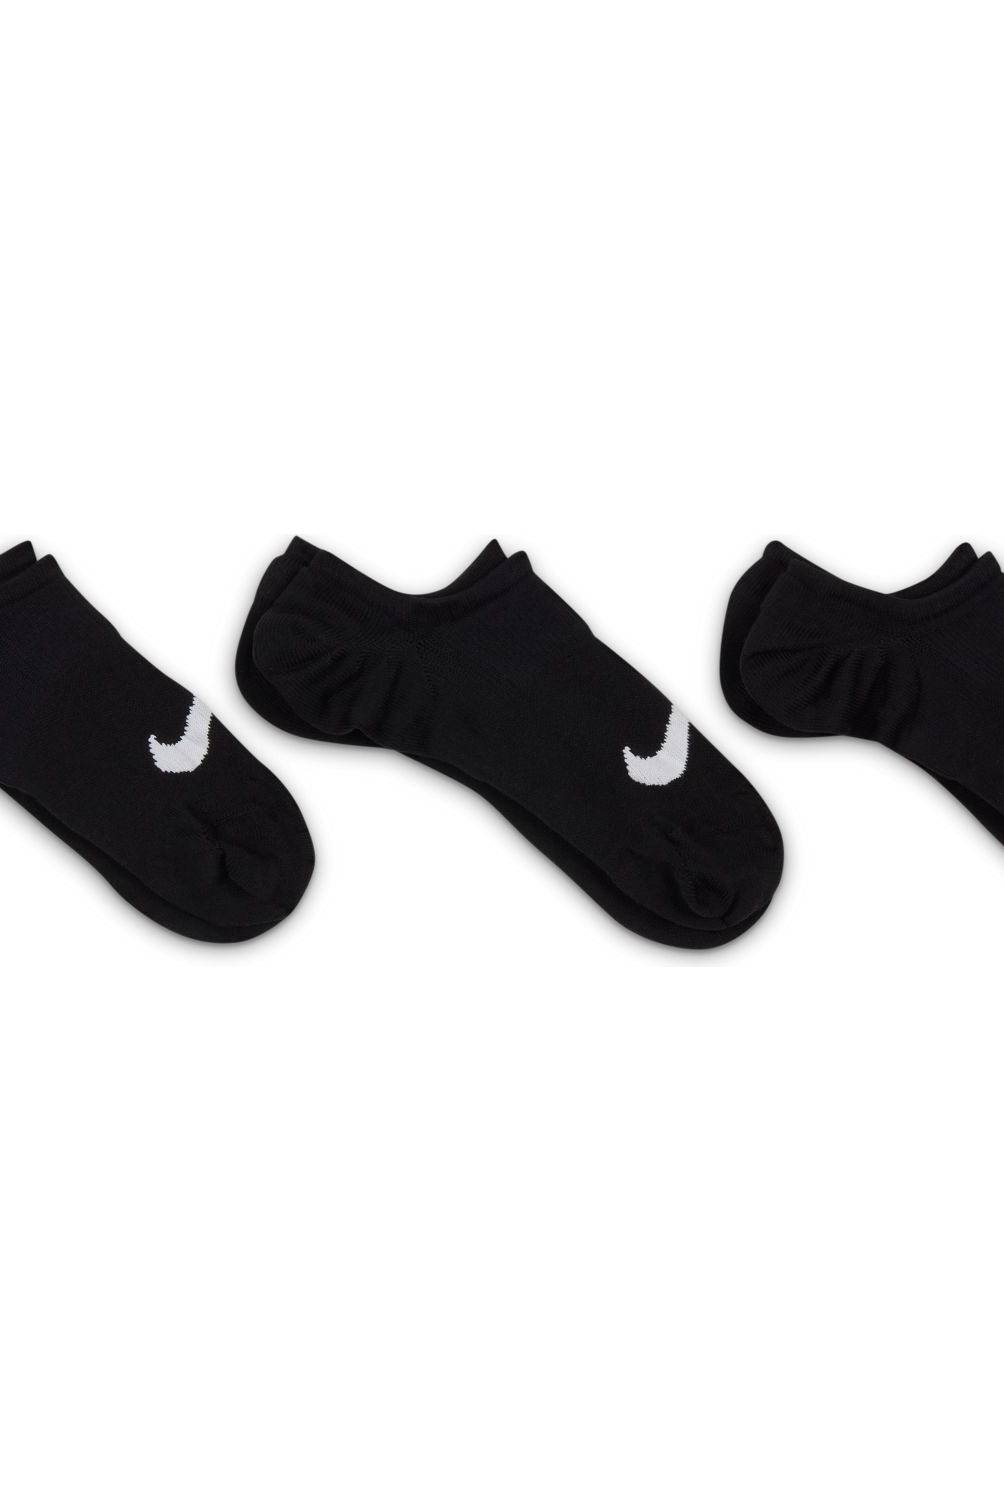 NIKE - Pack De 3 Calcetines Deportivos Mujer Nike